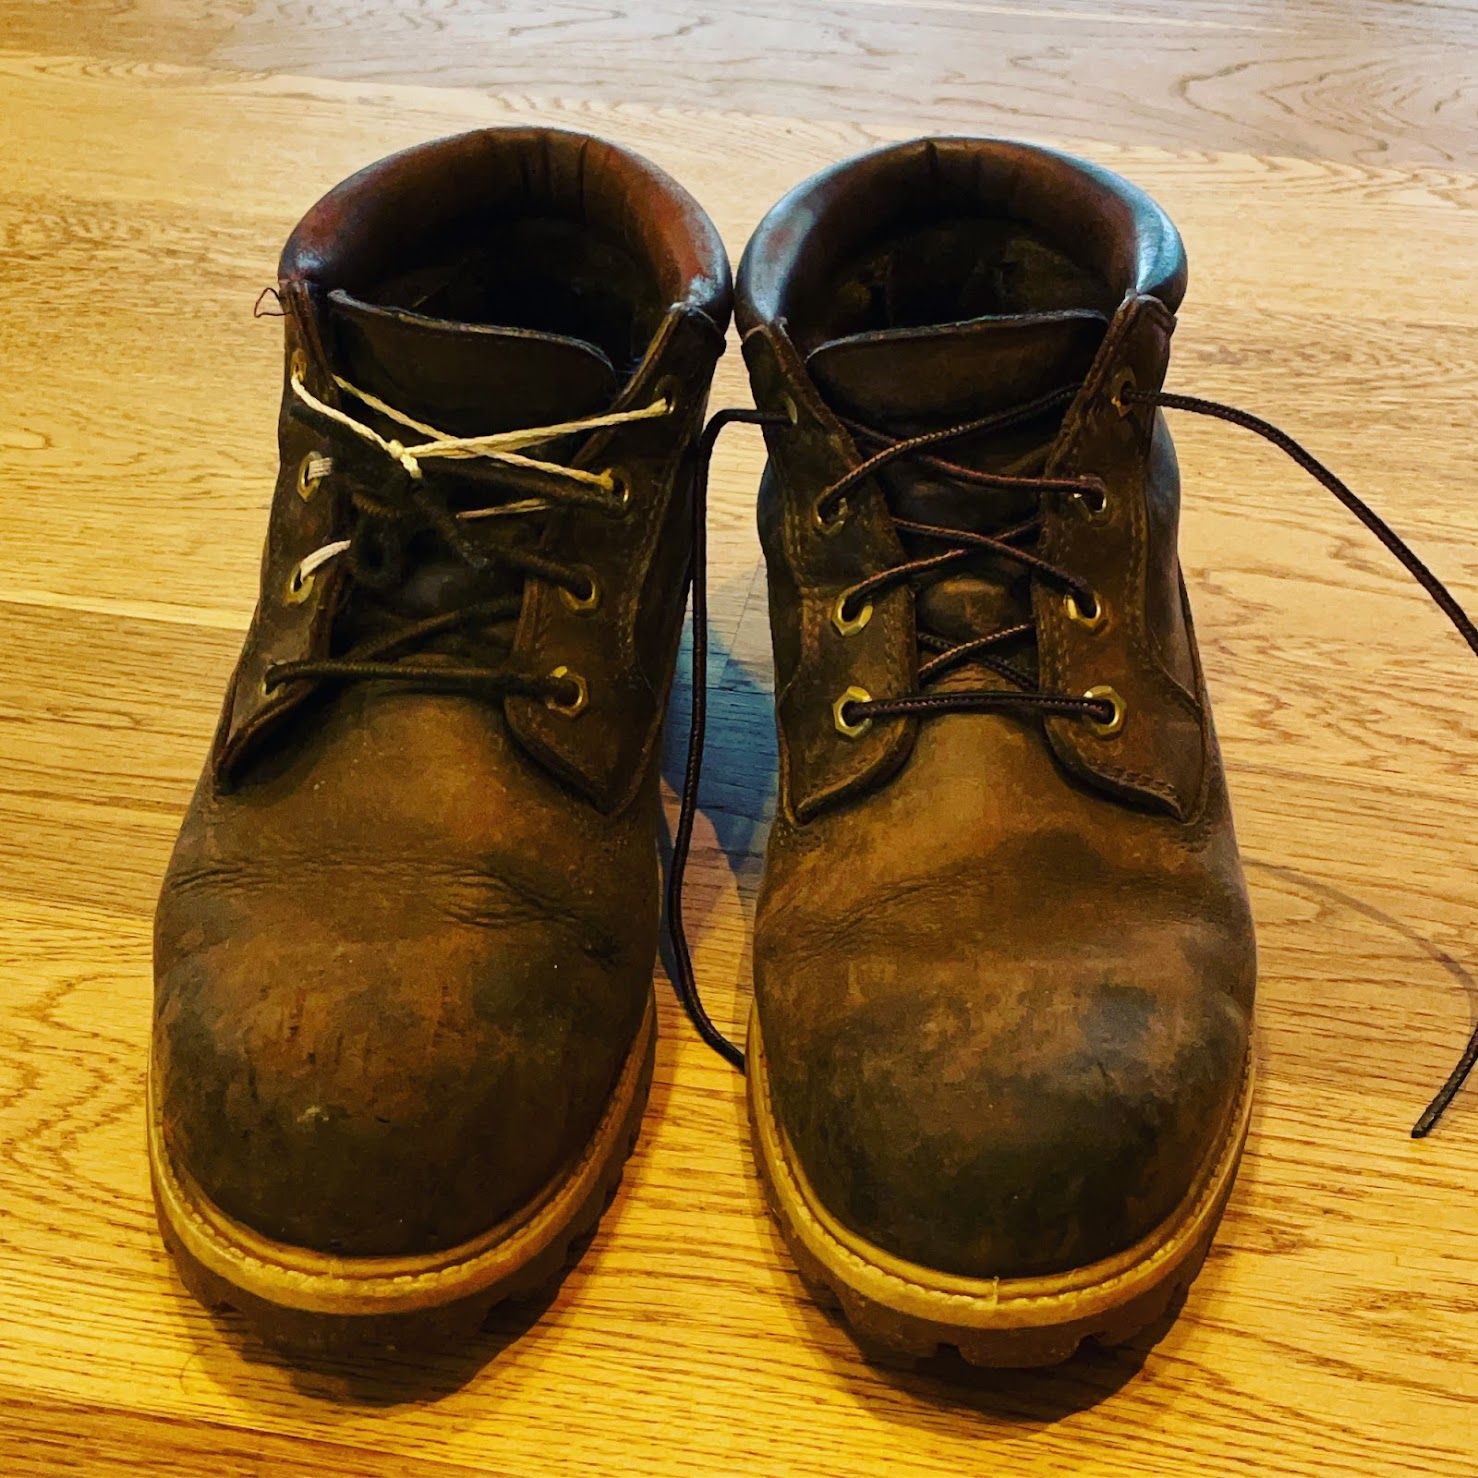 My trusty Timberland boots